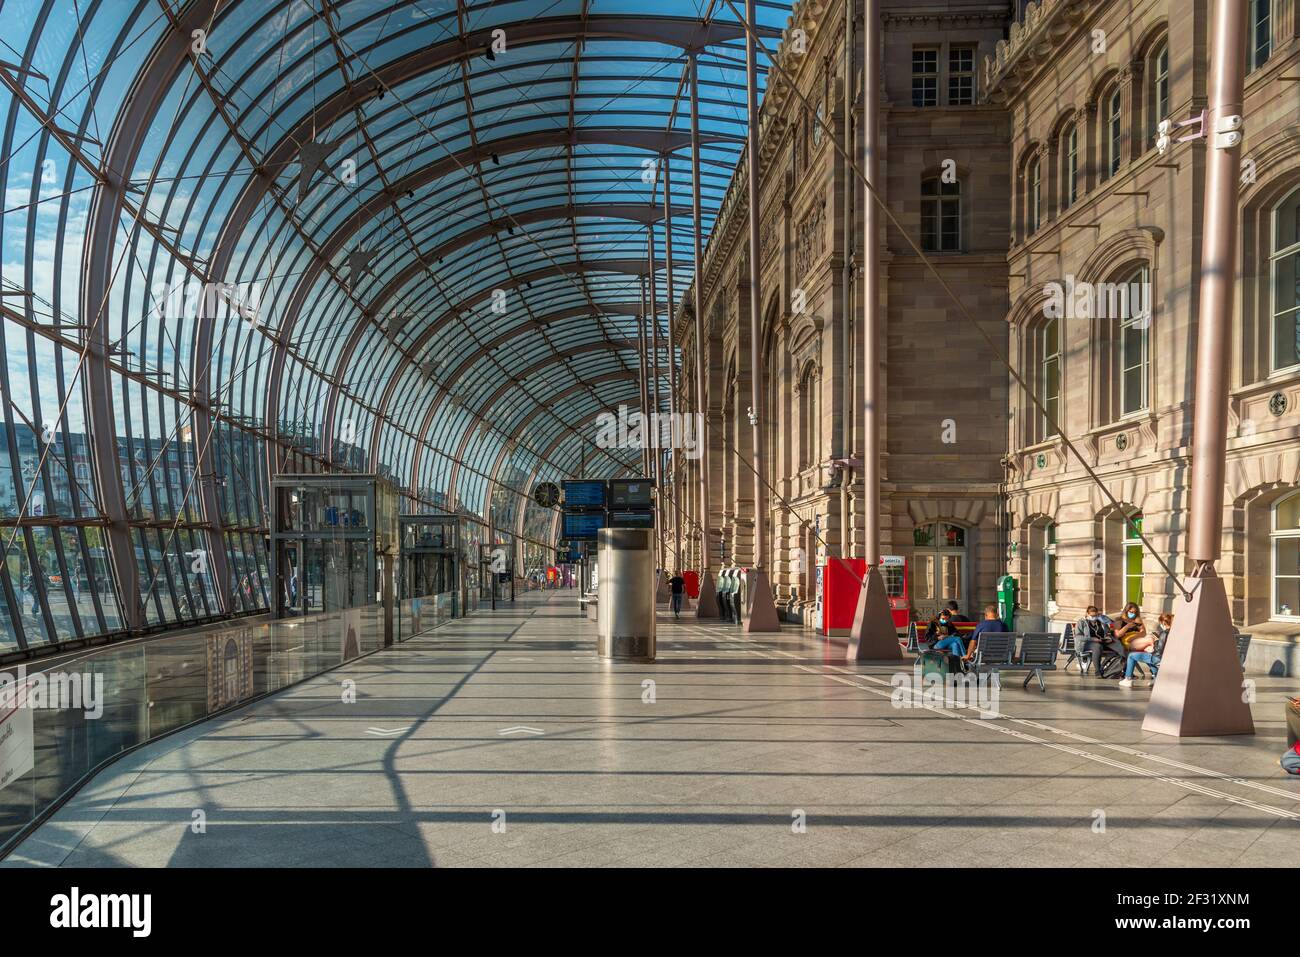 Strasbourg, France, September 22, 2020: Gare centrale train station in Strasbourg, France Stock Photo